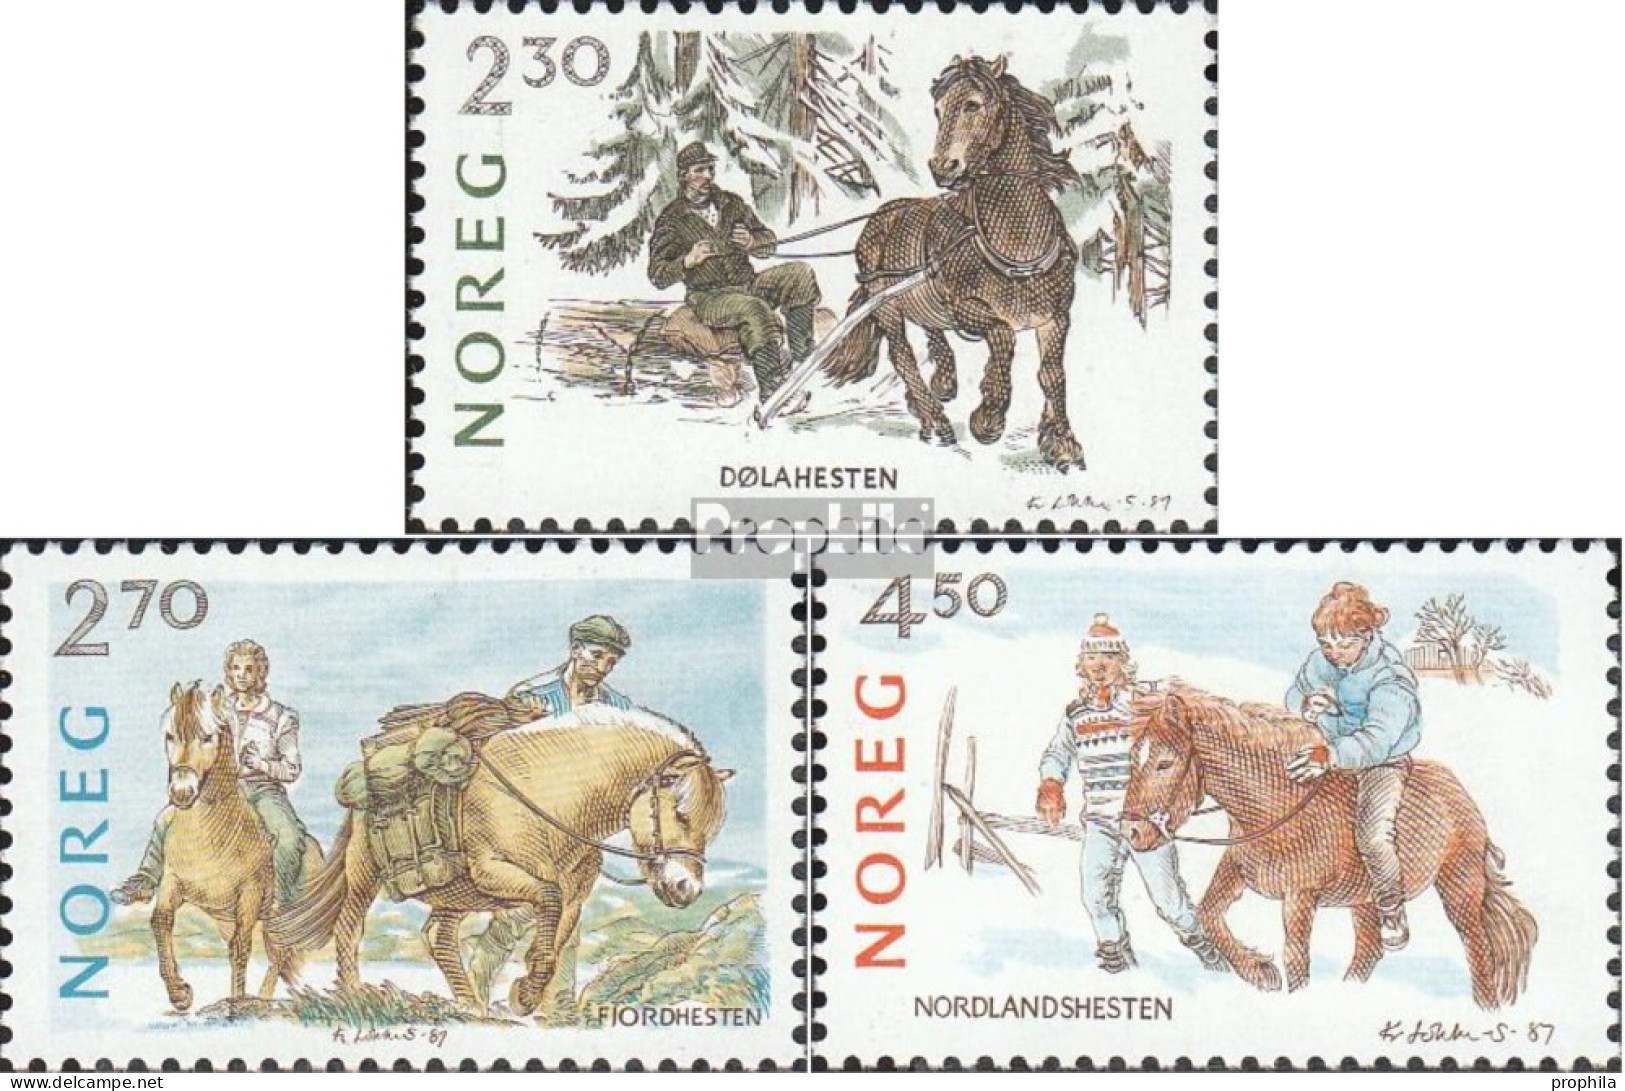 Norwegen 981-983 (kompl.Ausg.) Postfrisch 1987 Pferderassen - Ongebruikt